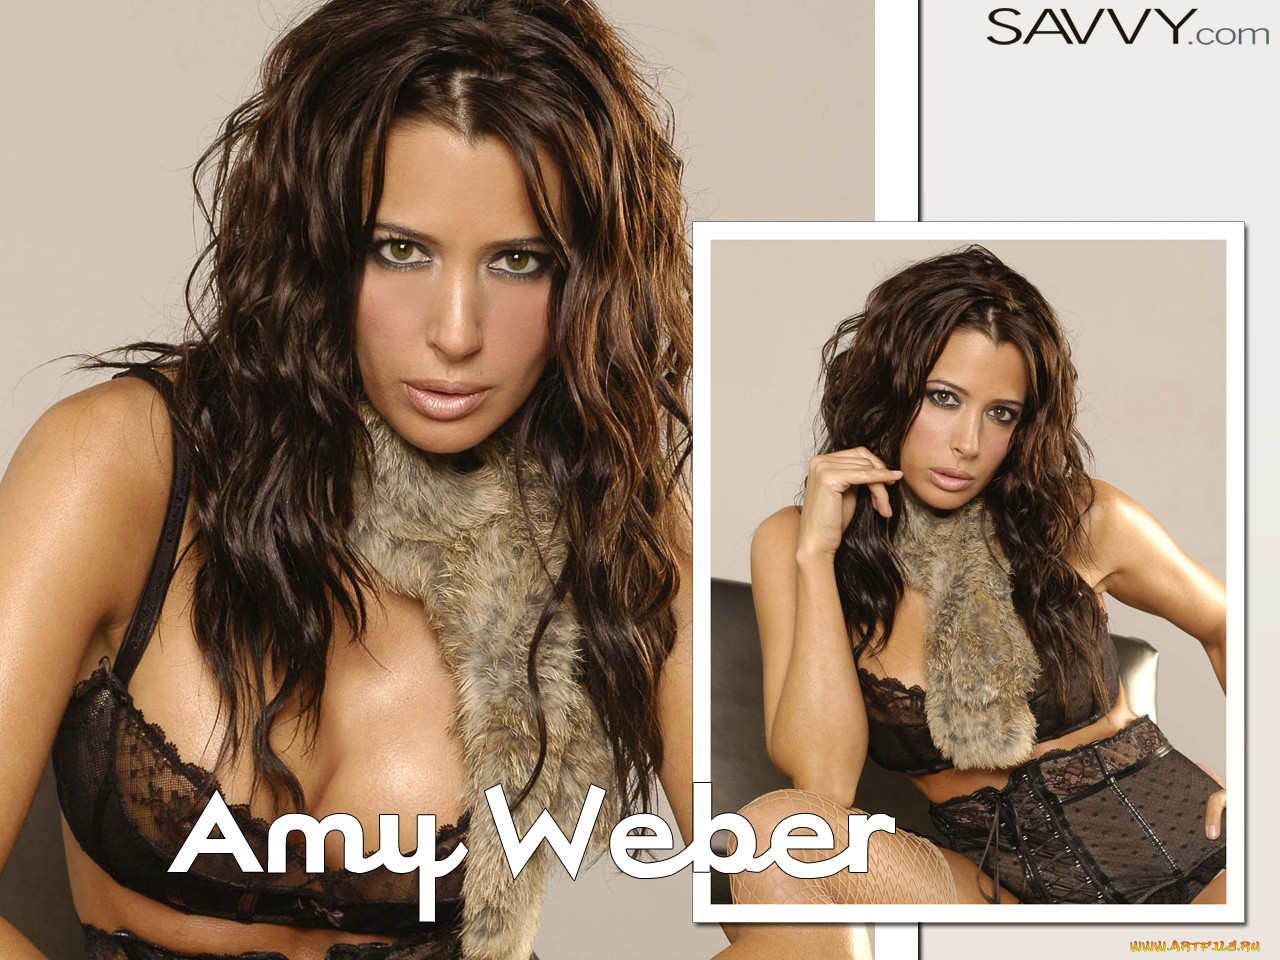 Amy Weber, 